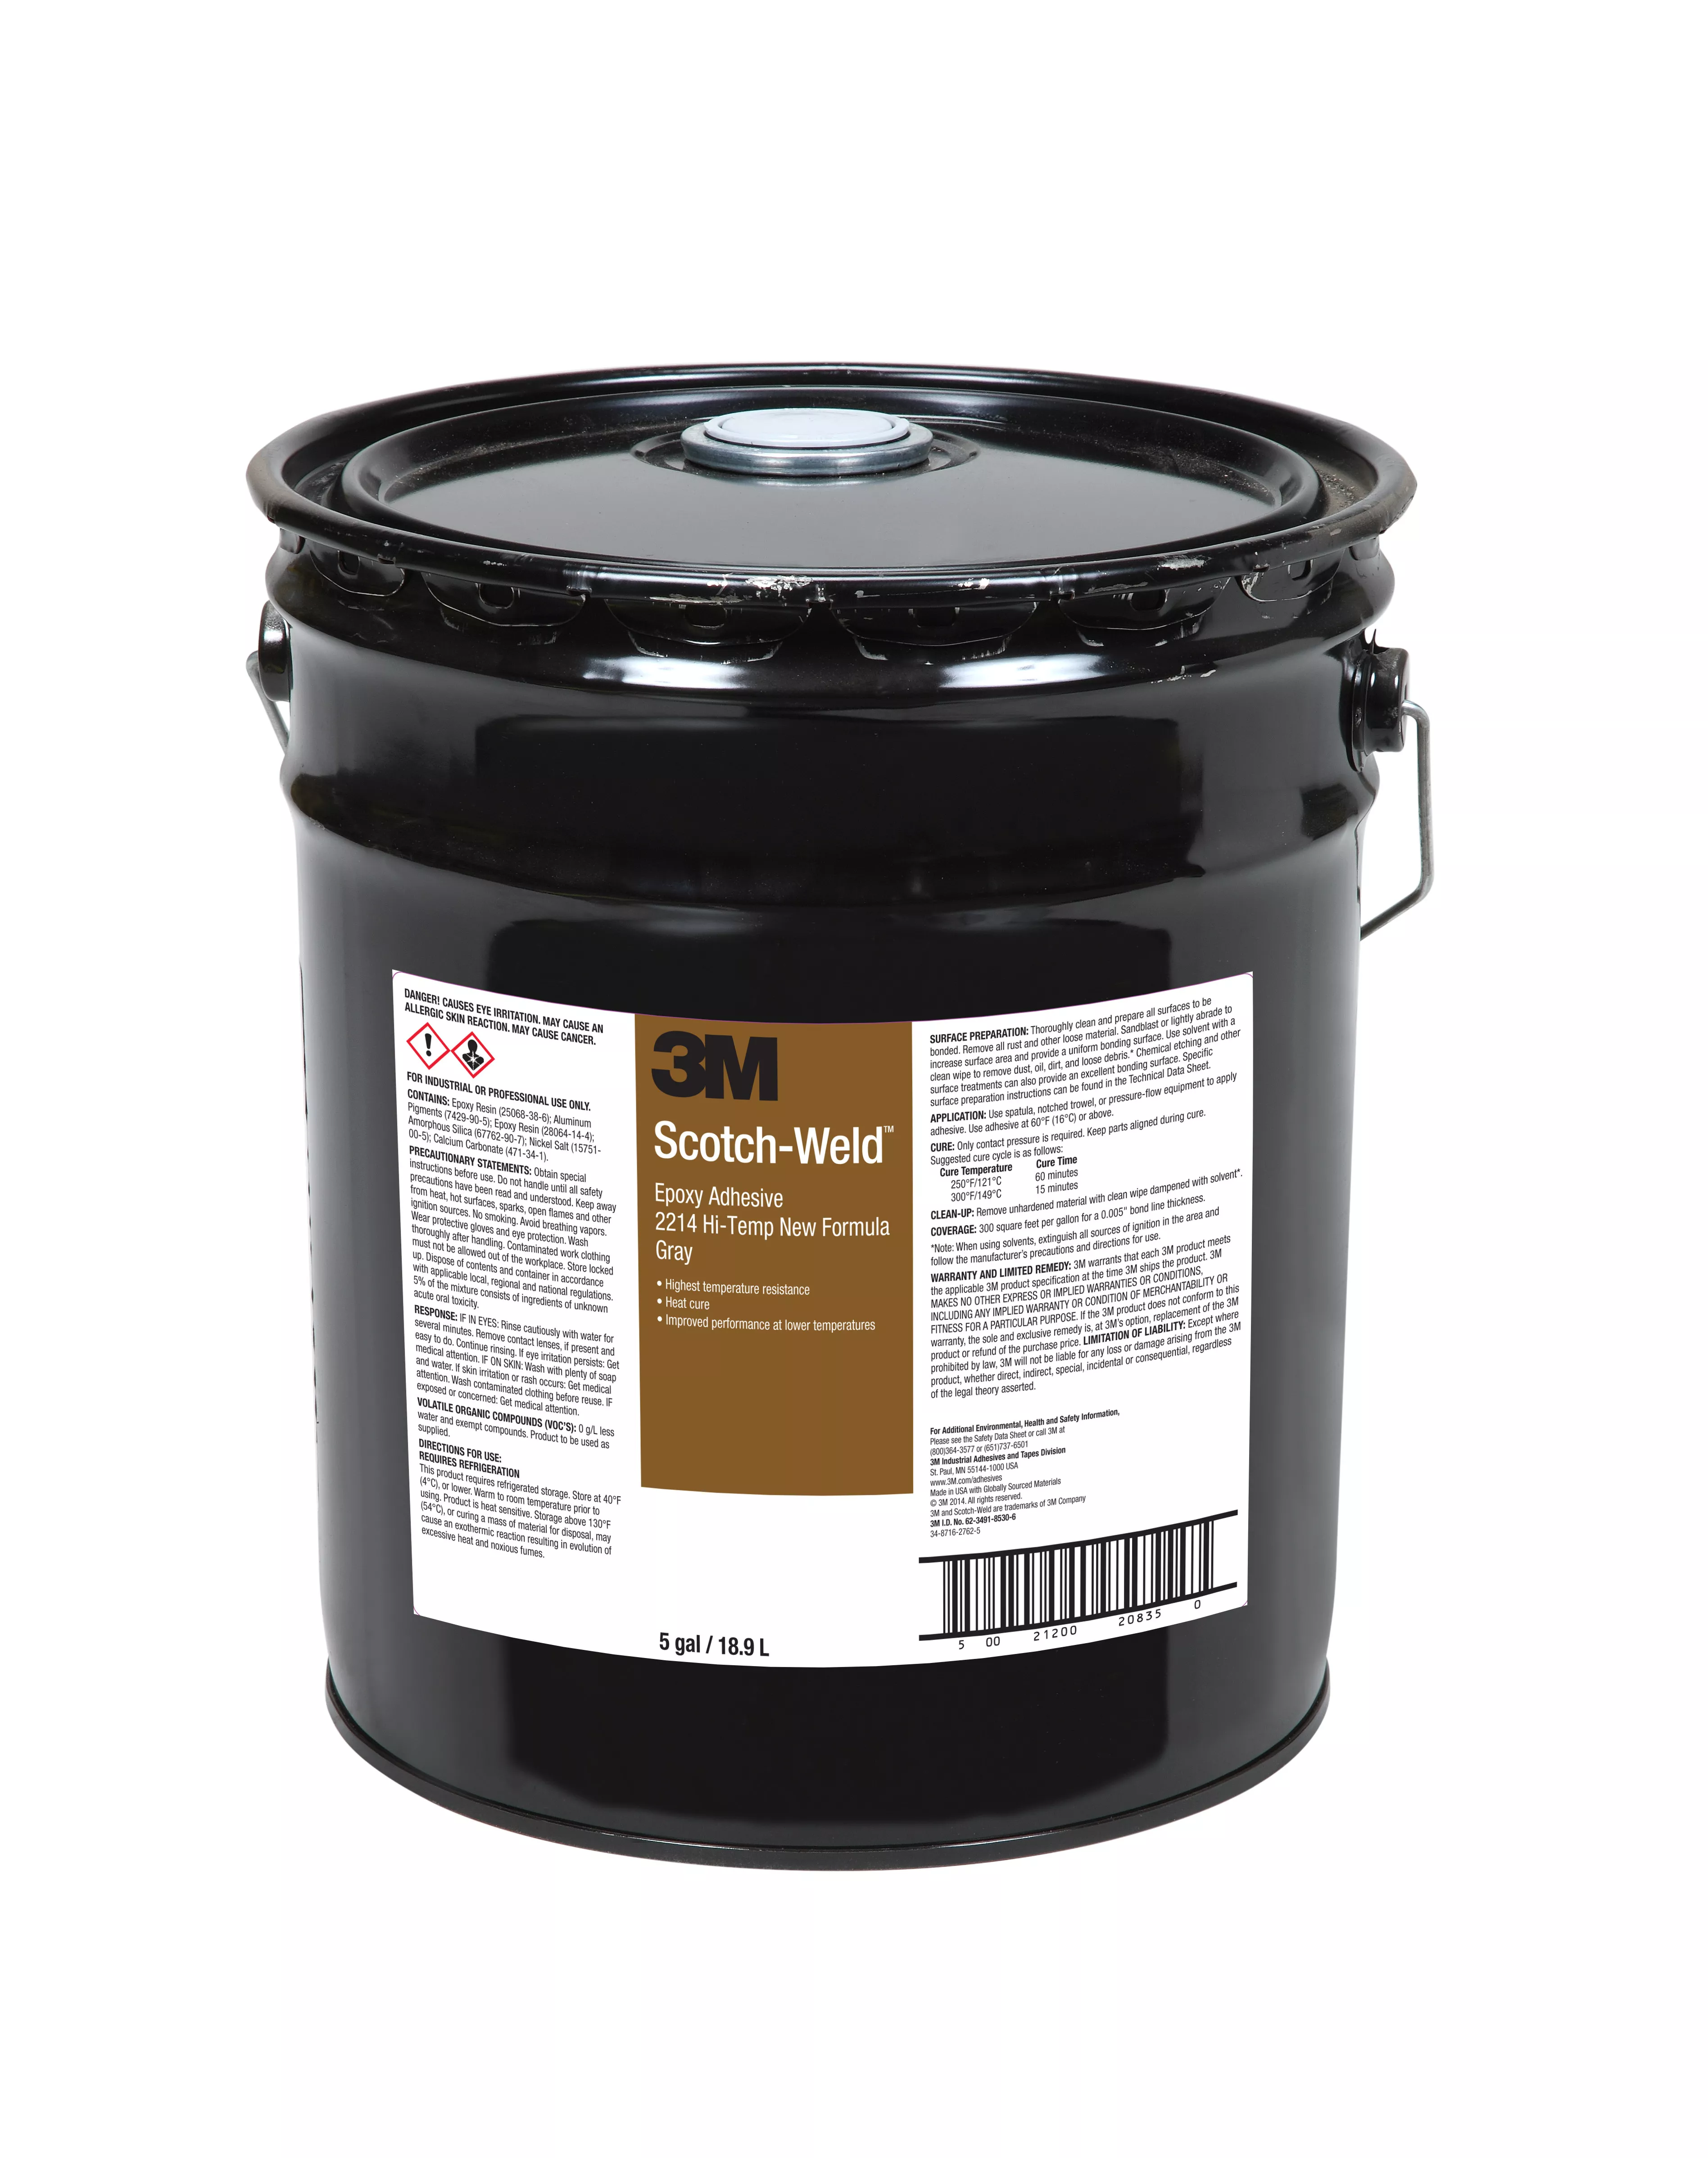 3M™ Scotch-Weld™ Epoxy Adhesive 2214, Hi-Temp New Formula, Gray, 5
Gallon (Pail), Drum